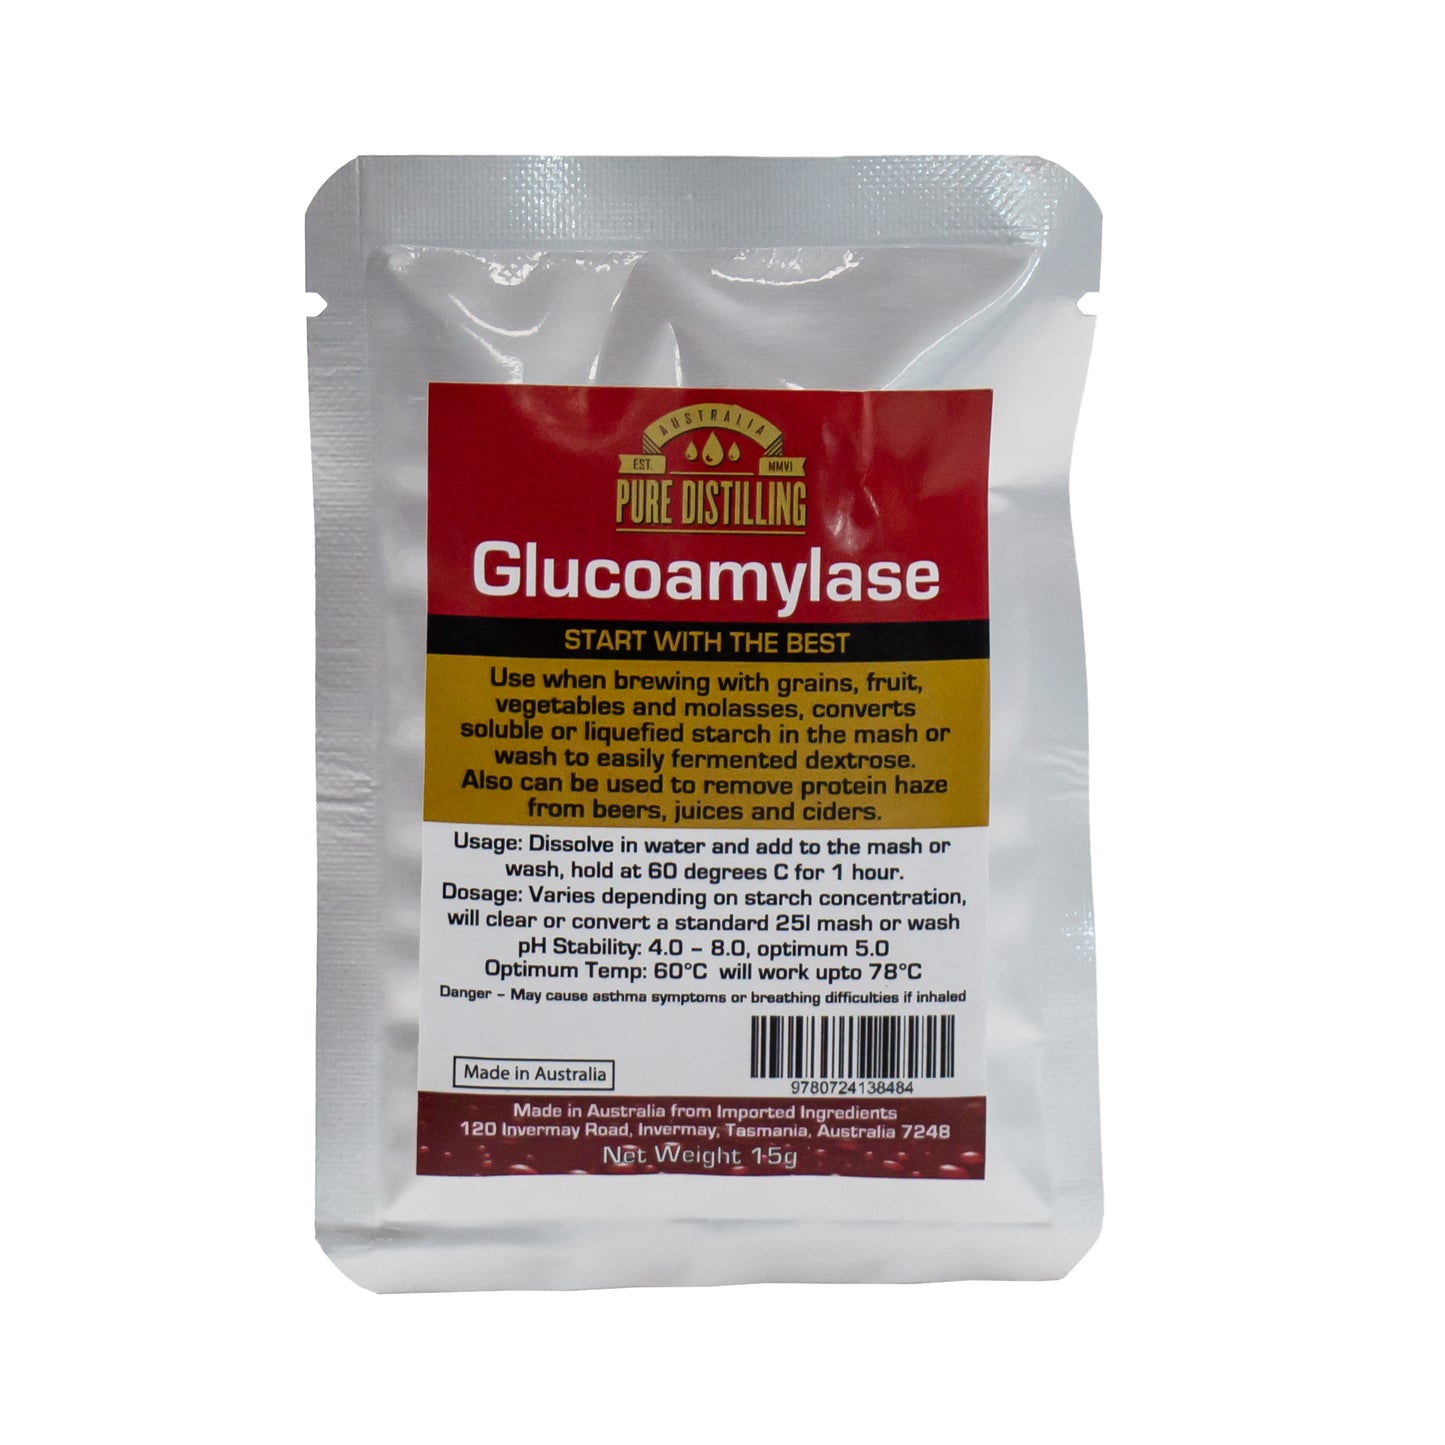 15g packet of glucoamylase.